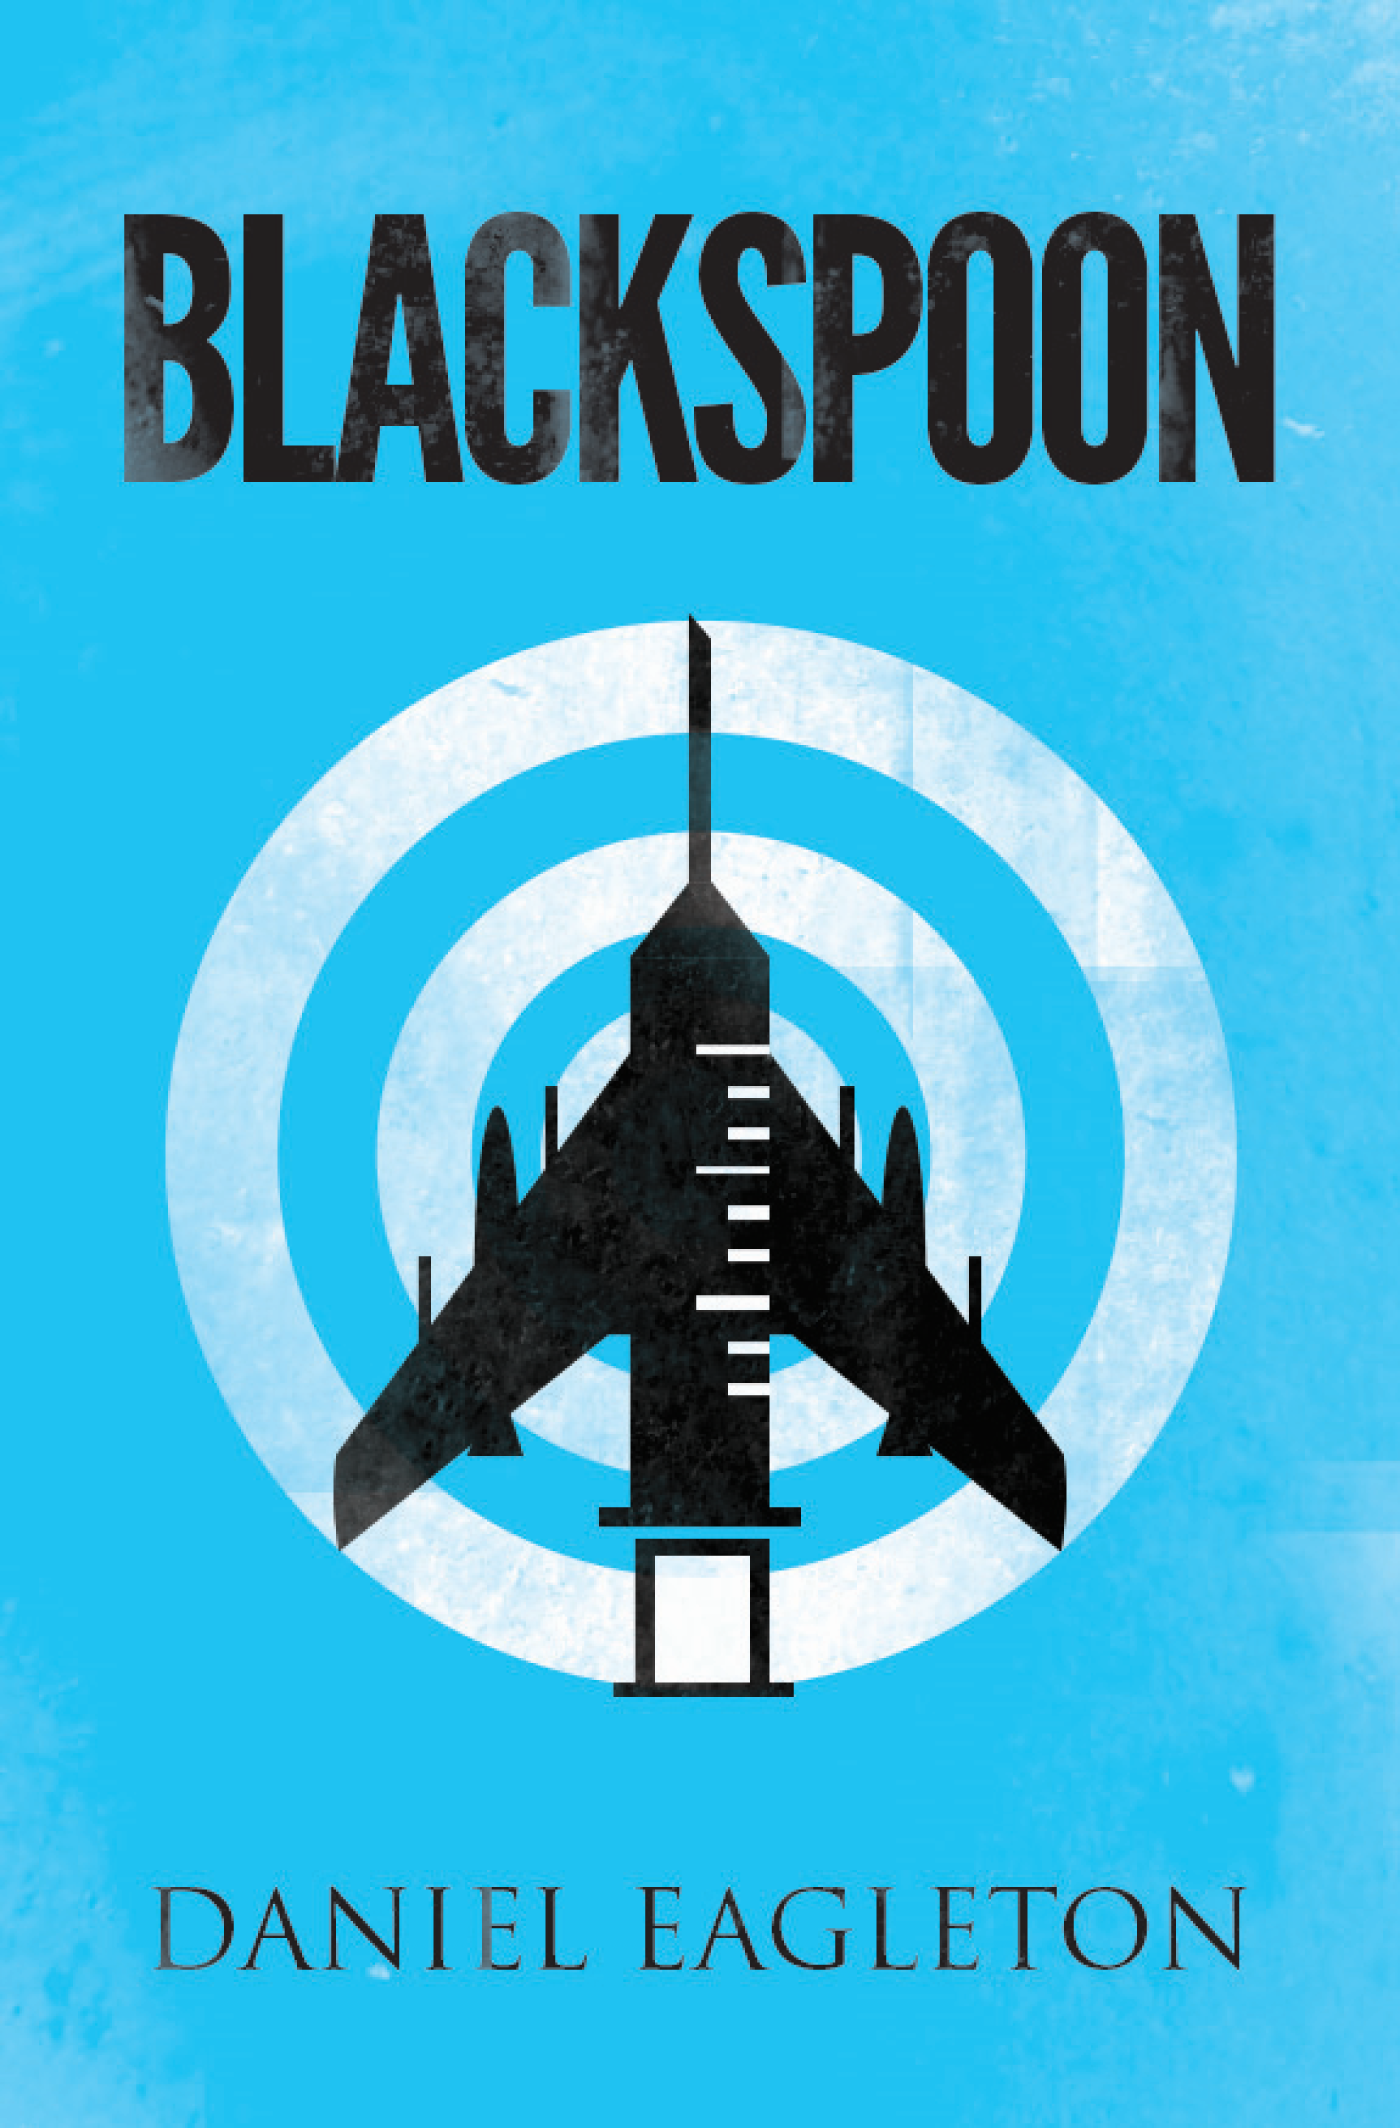 FREE: Blackspoon by Daniel Eagleton